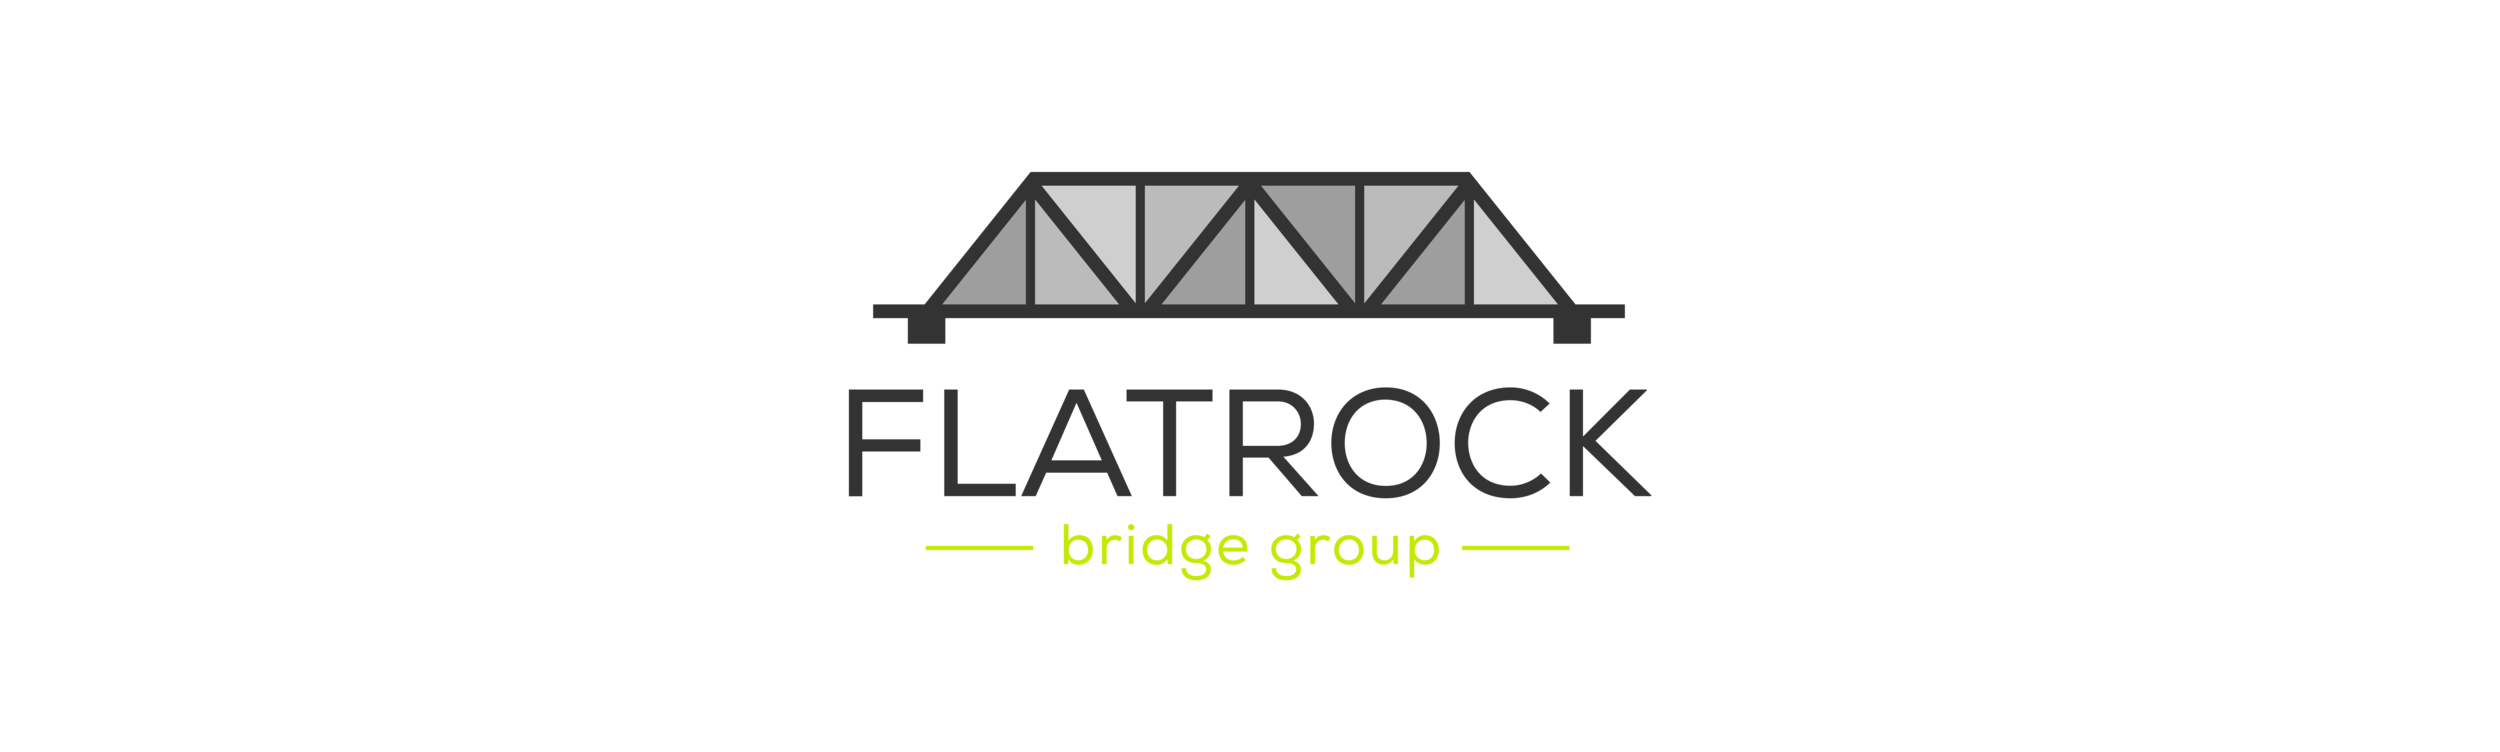 Flatrock Bridge Group Logo_Large_Dark33 copy.png